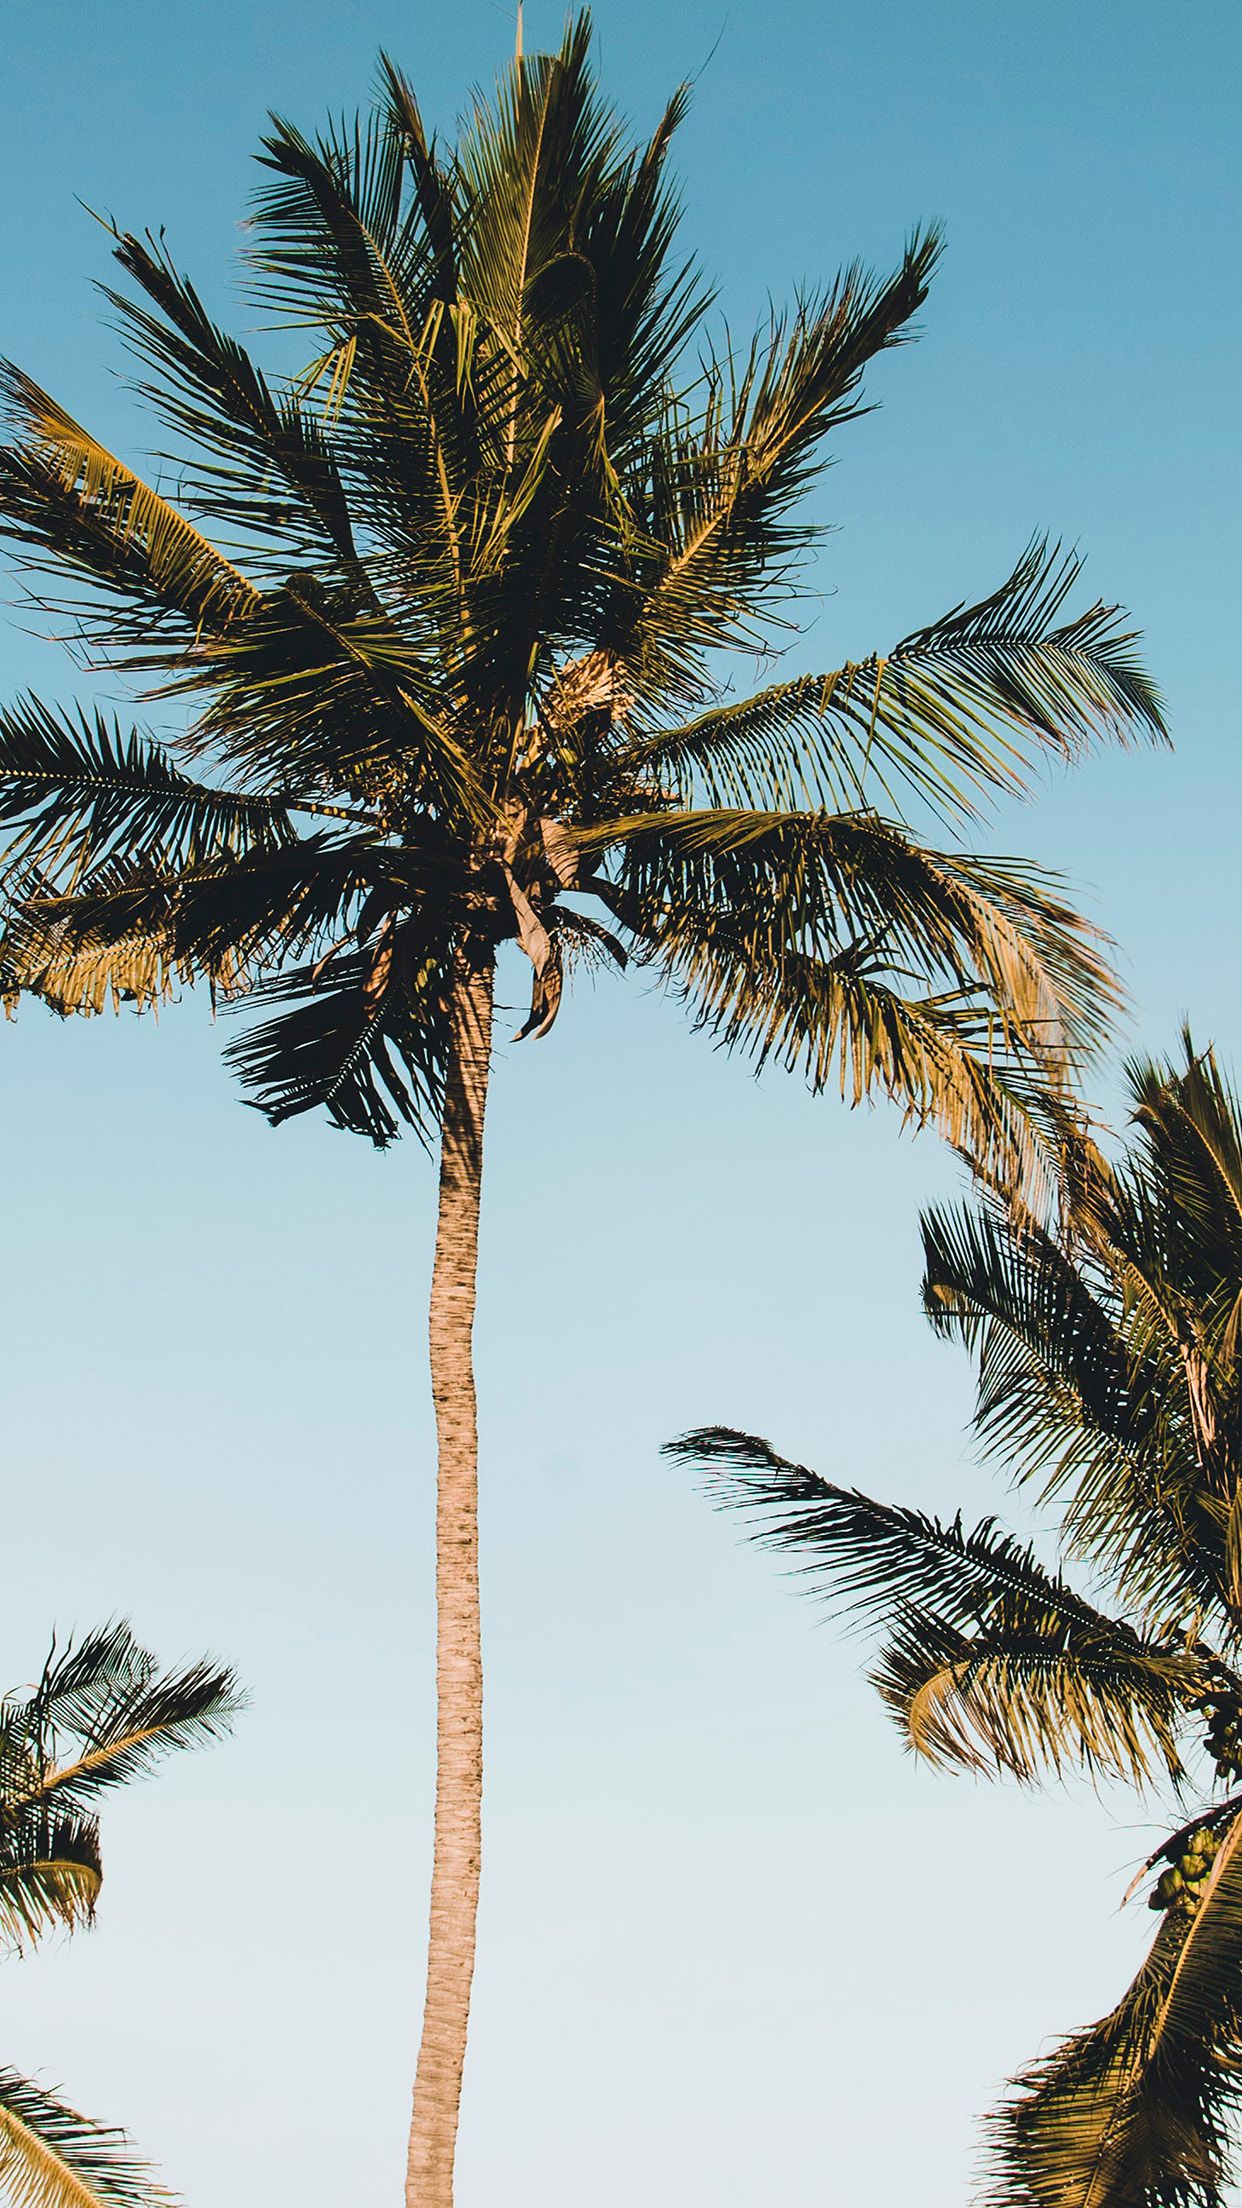 iPhone X wallpaper. nature coconut tree summer